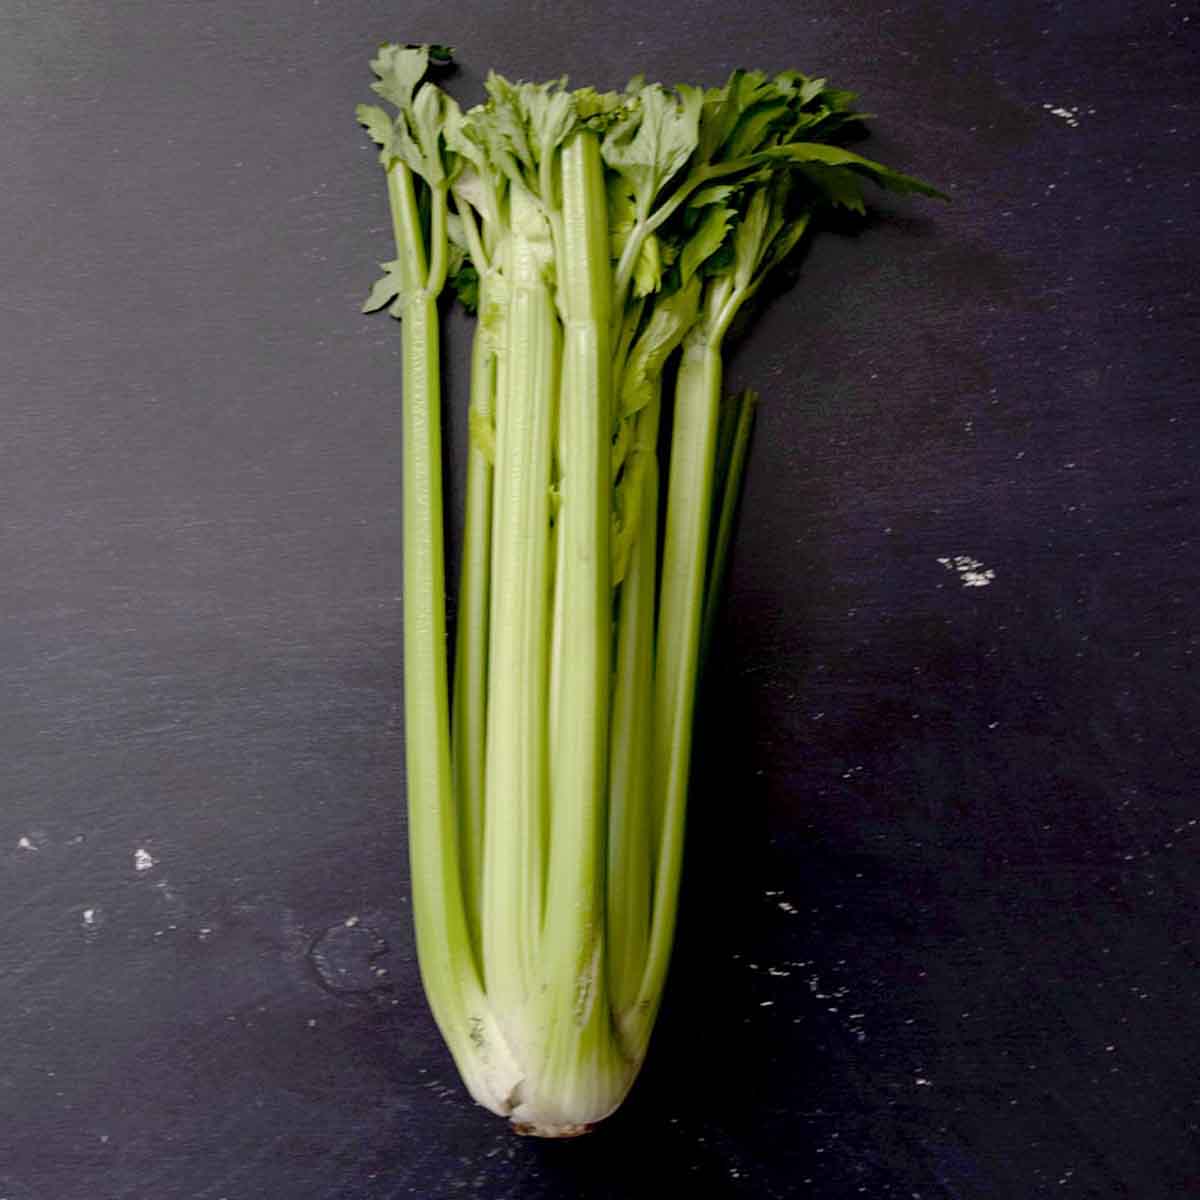 Celery heart on table.